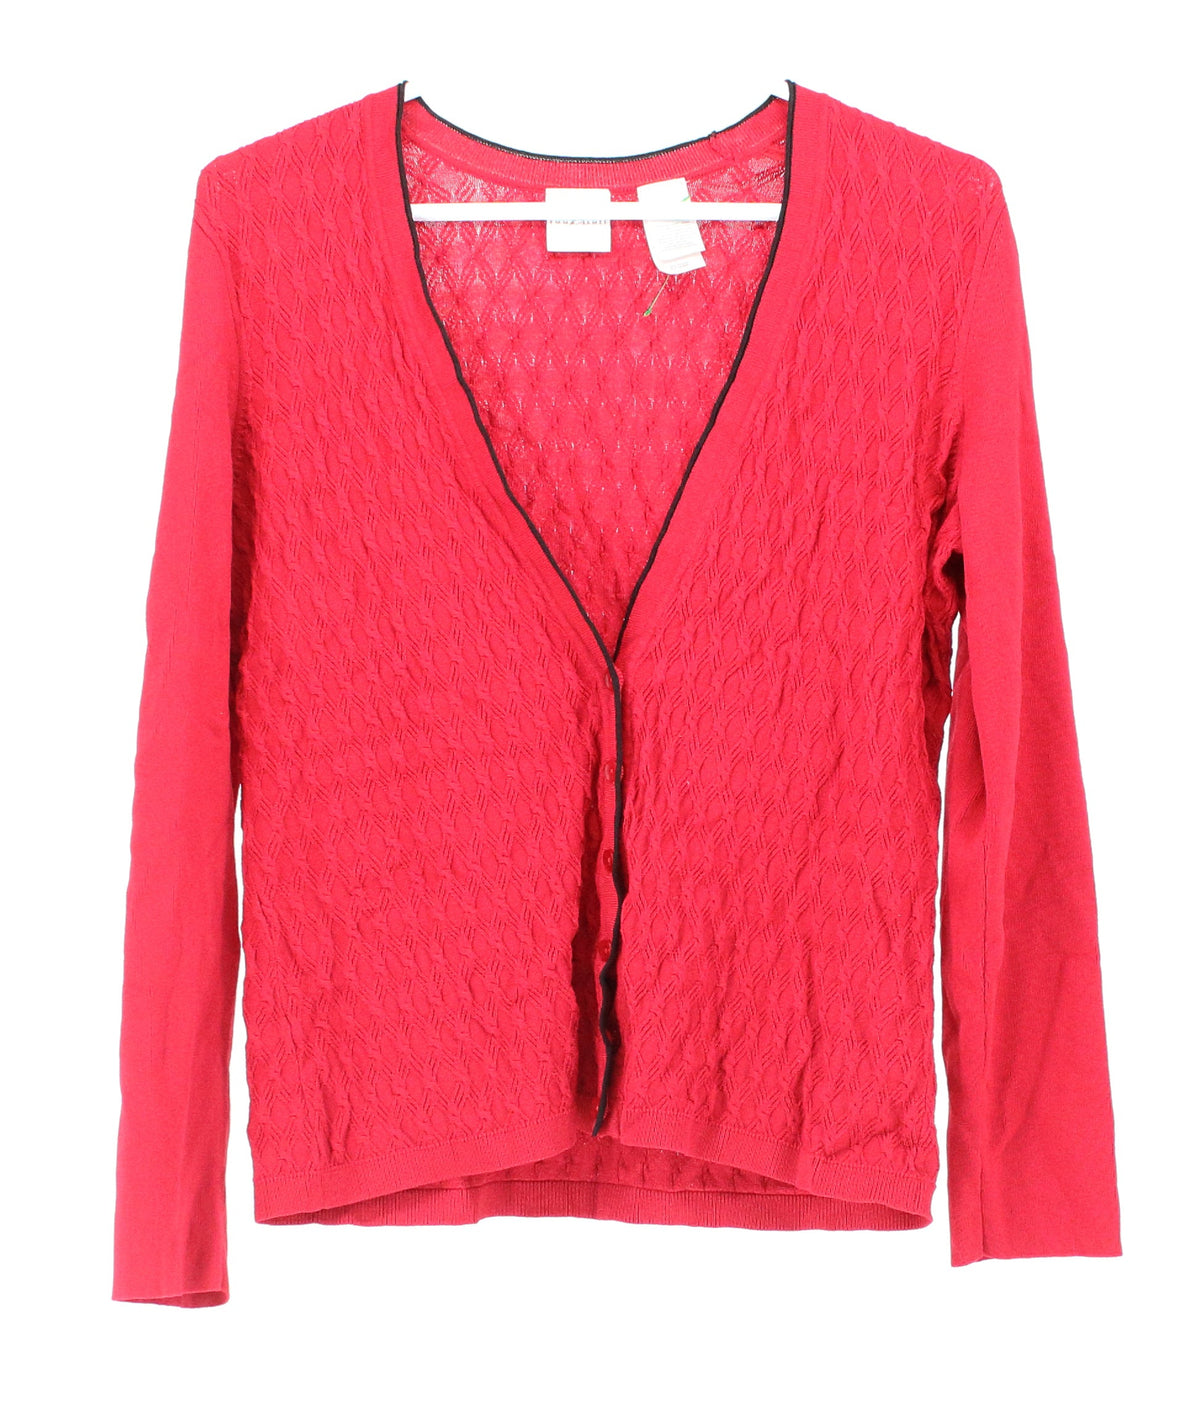 Emma & James Red Cardigan Sweater